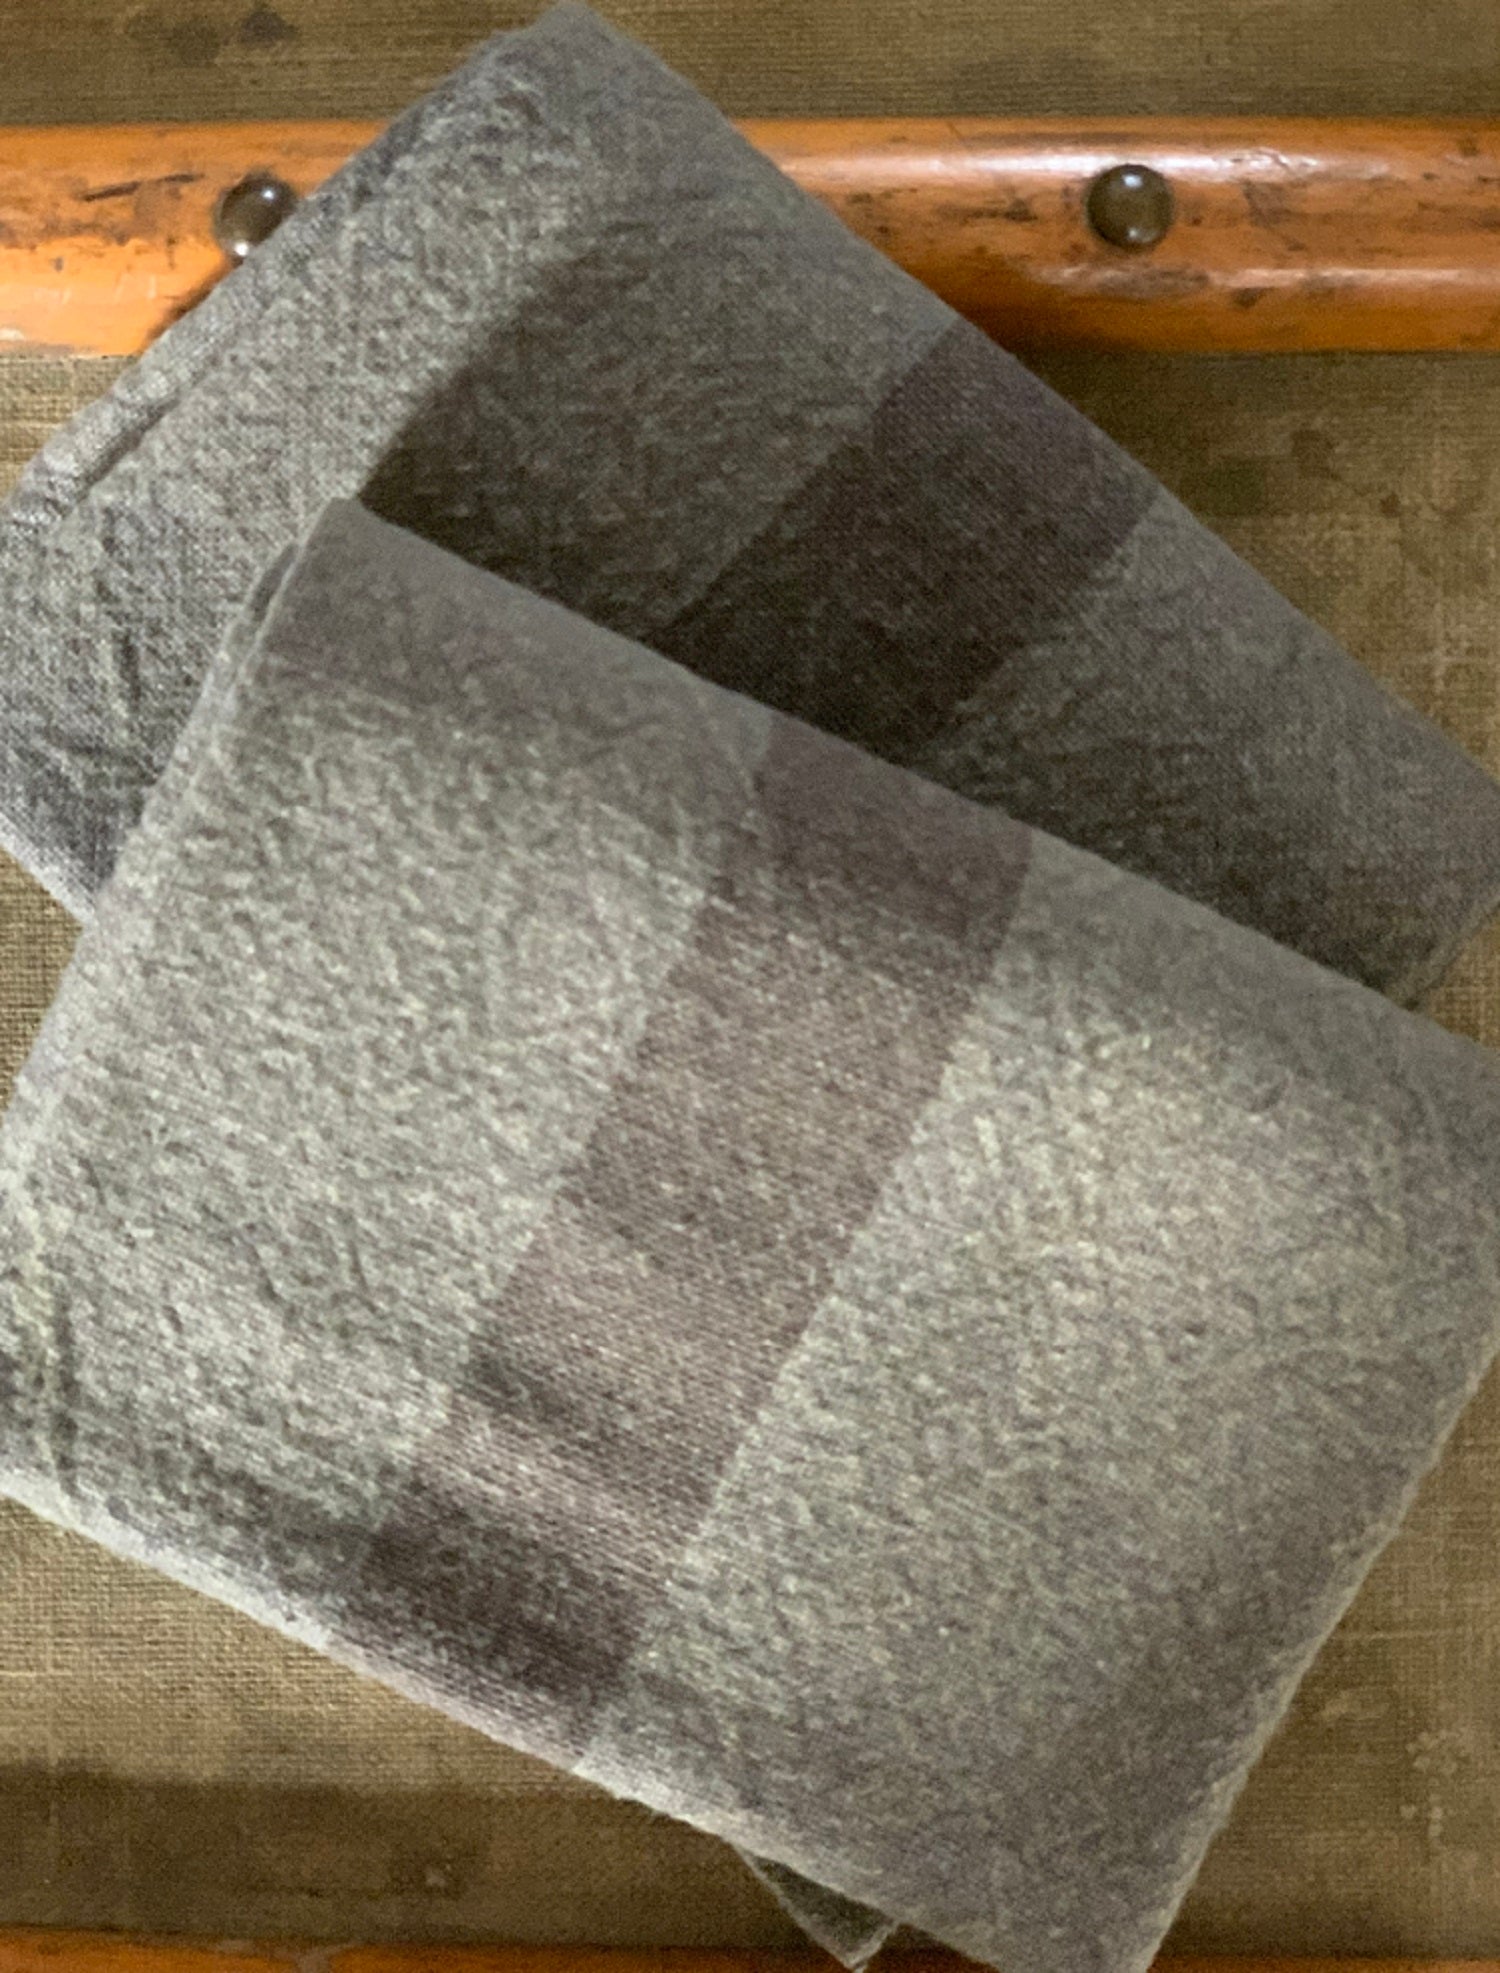 Charvet Editions "Doudou Stripe" (Oxyde & Marron), Natural  linen tea towel. Made in France. - Home Landing